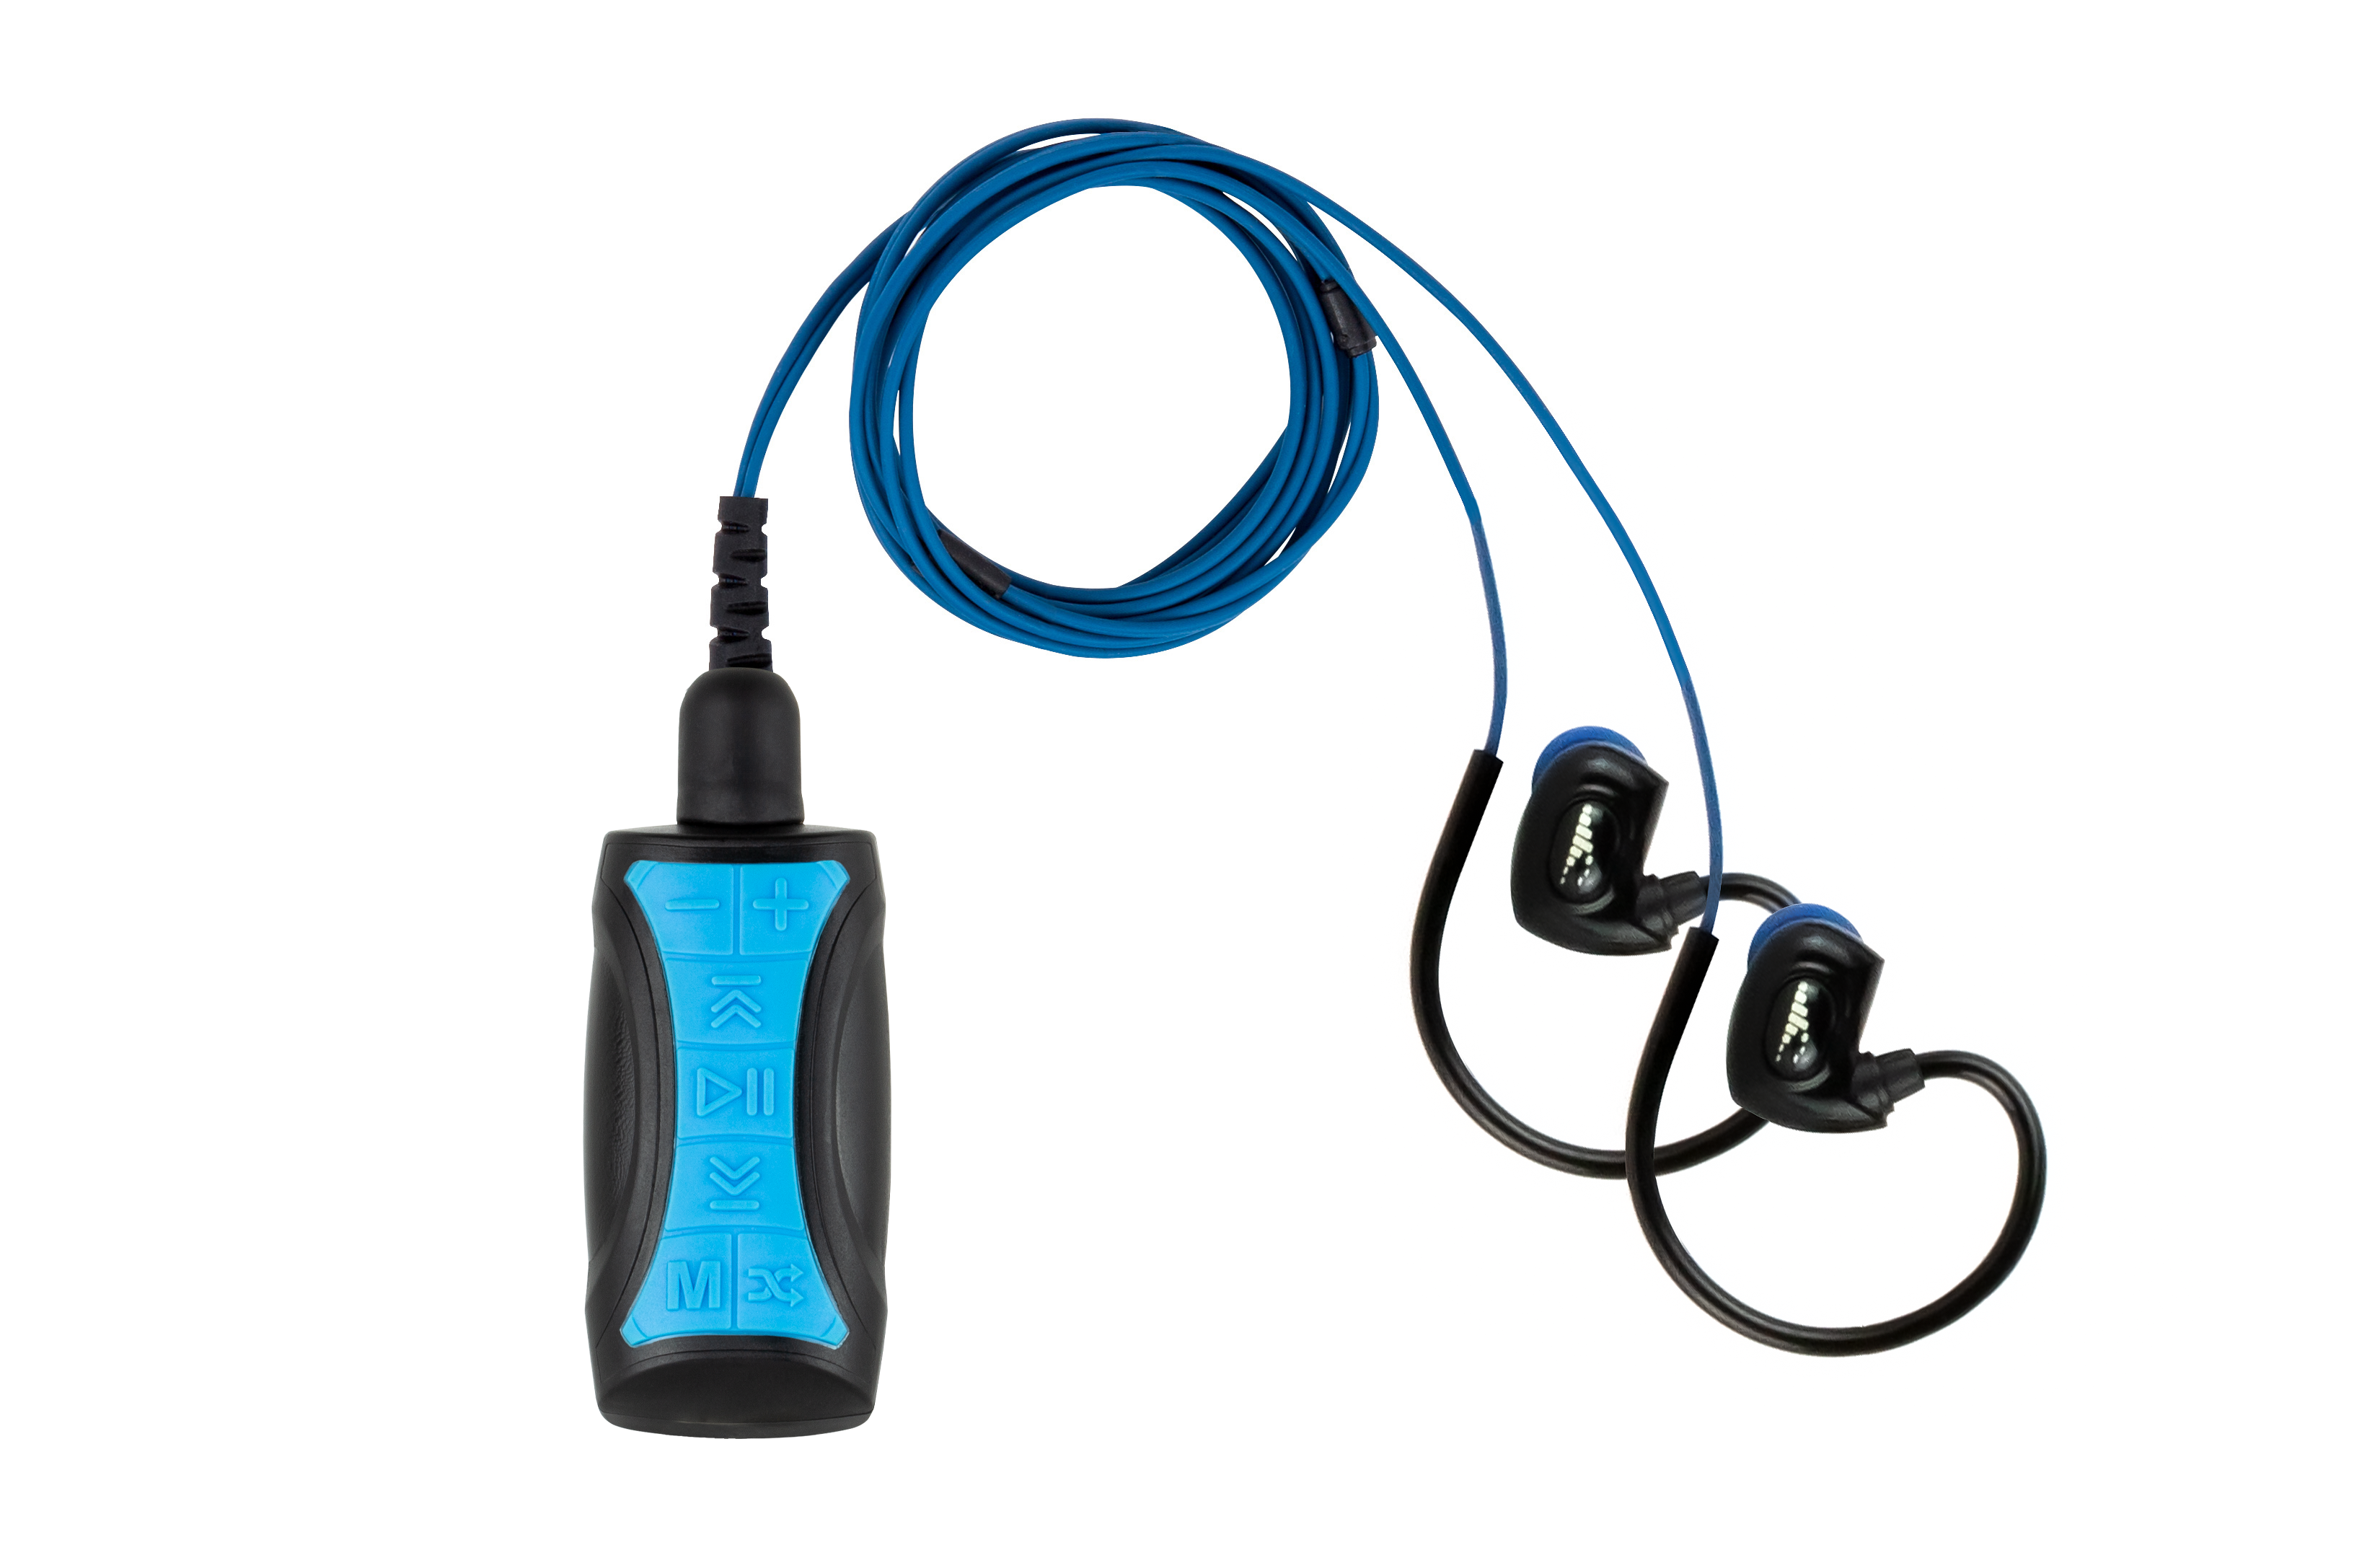 STREAMDM - Waterproof MP3 player with Bluetooth